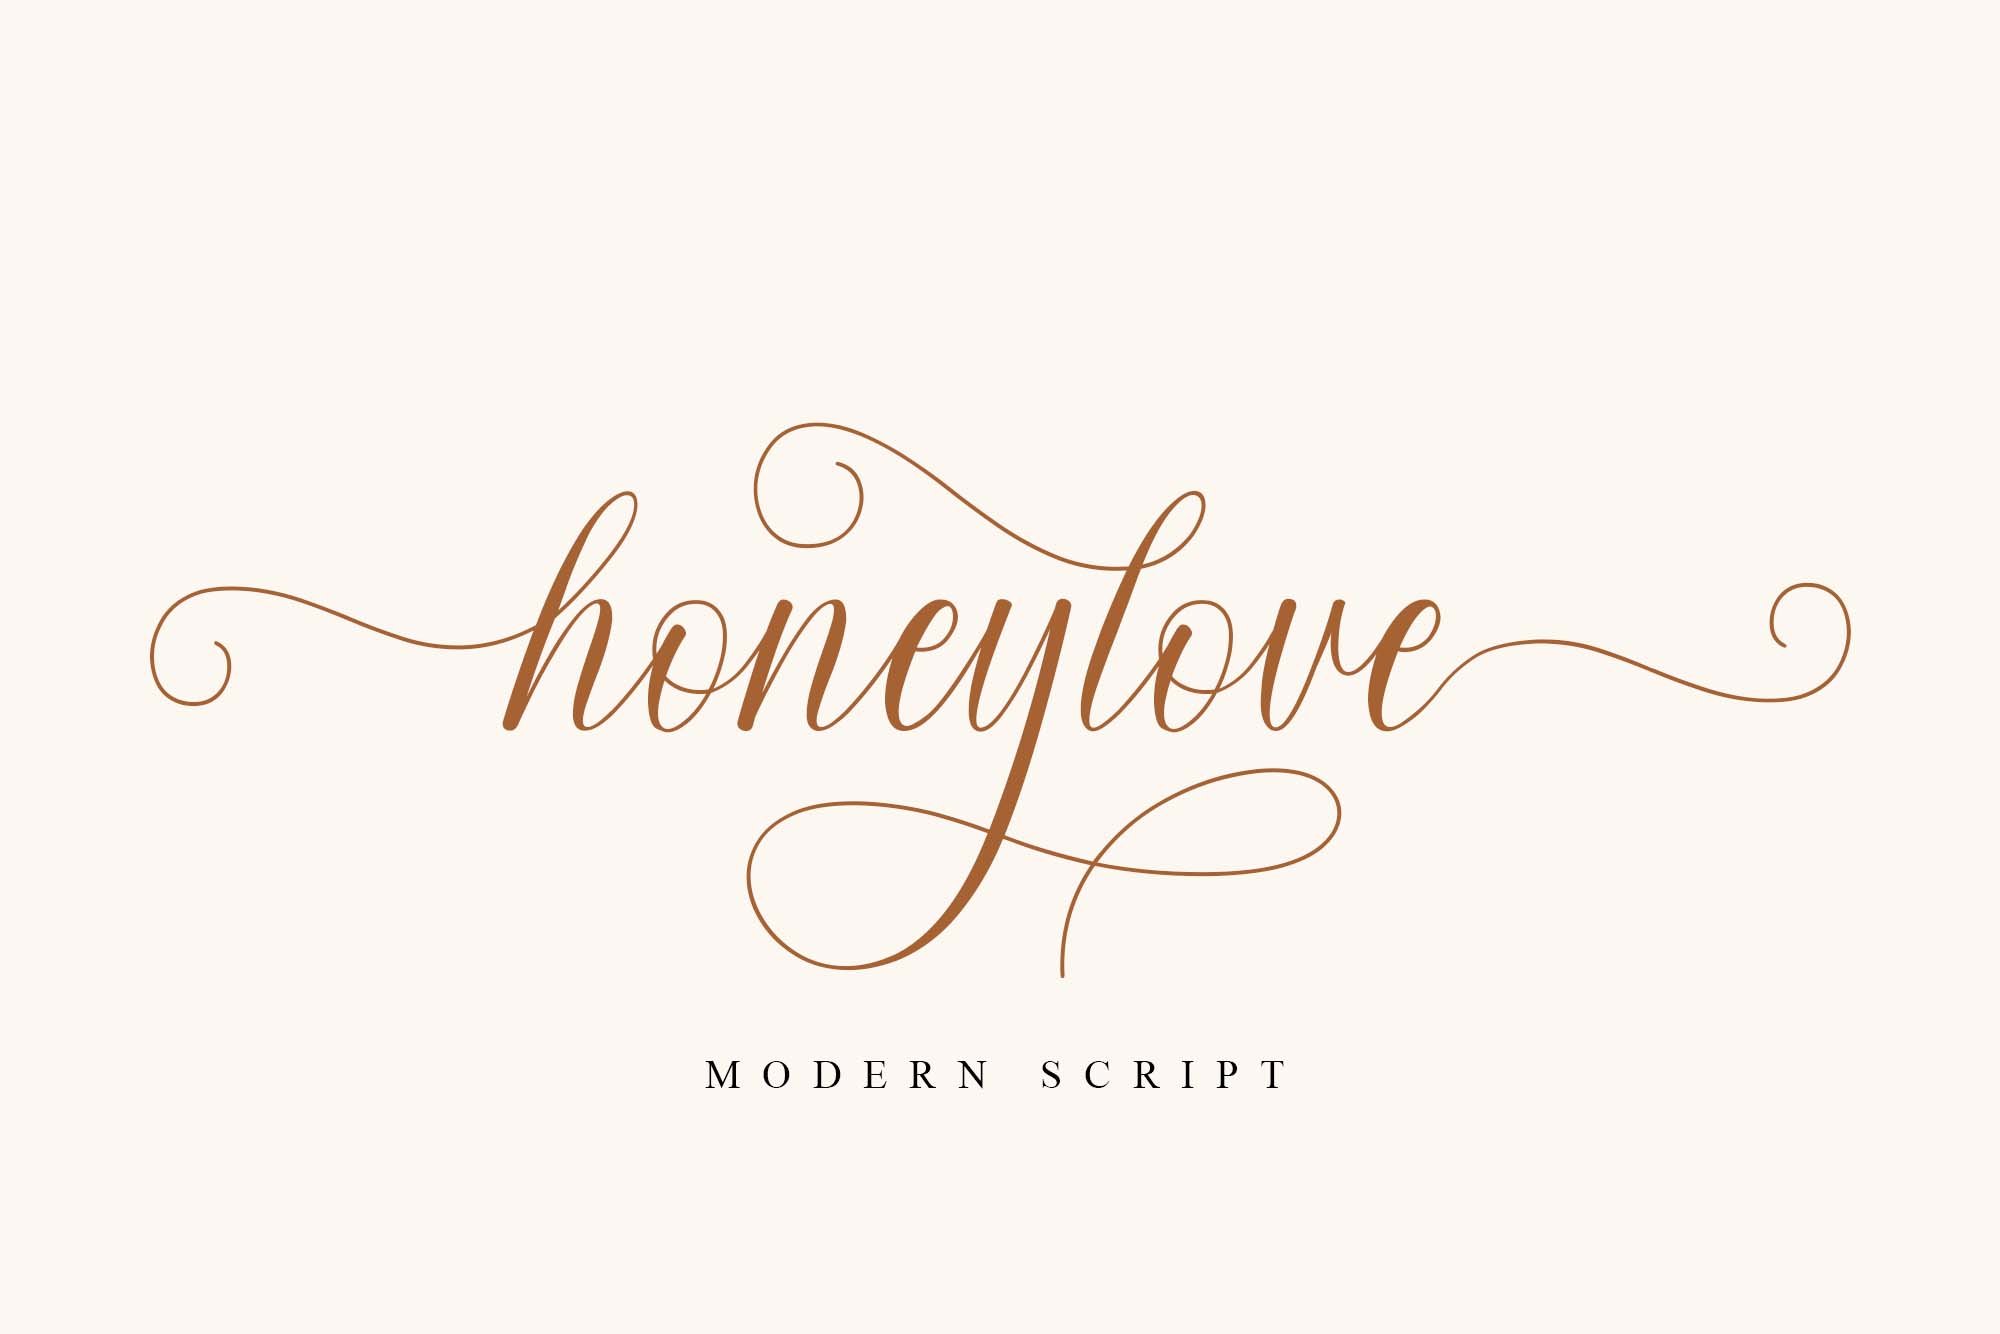 Honeylove - Modern Calligraphy cover image.